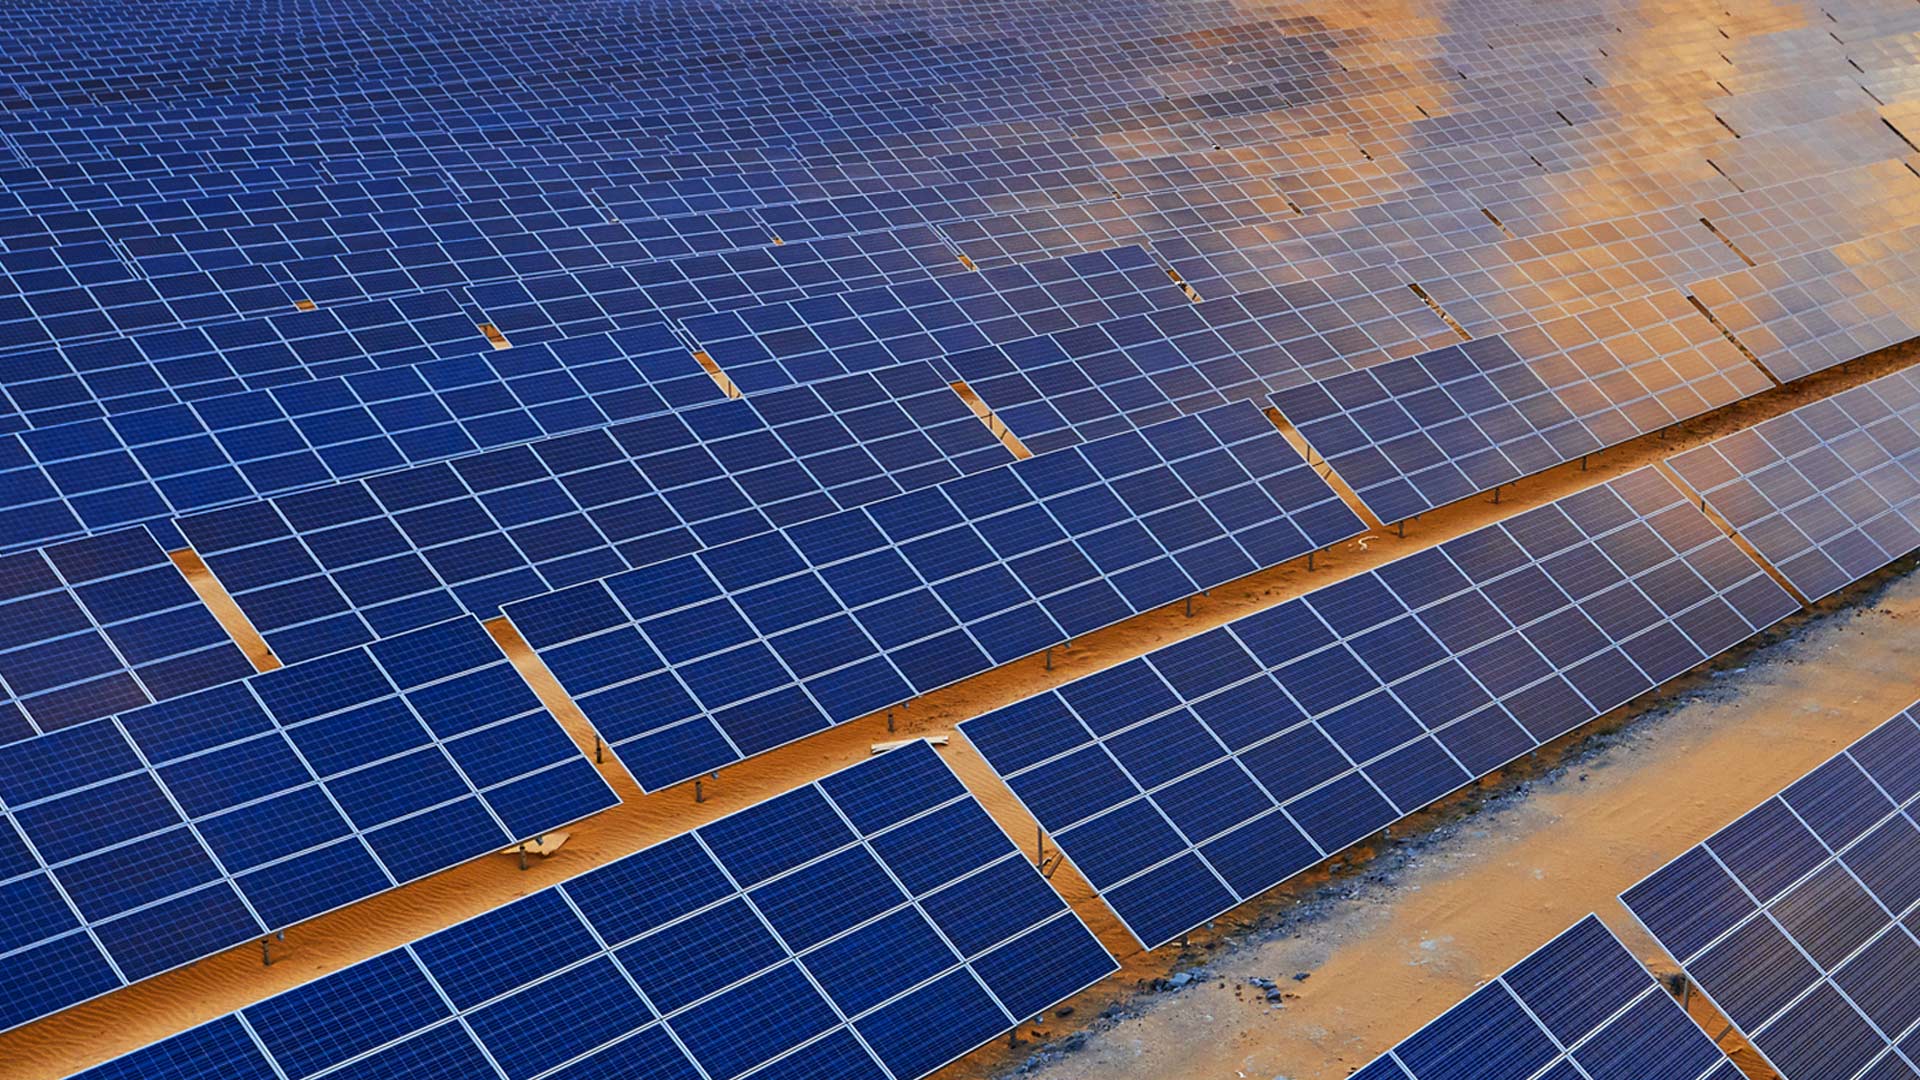 Maxeon Claims Solar Panel Patent Infringement